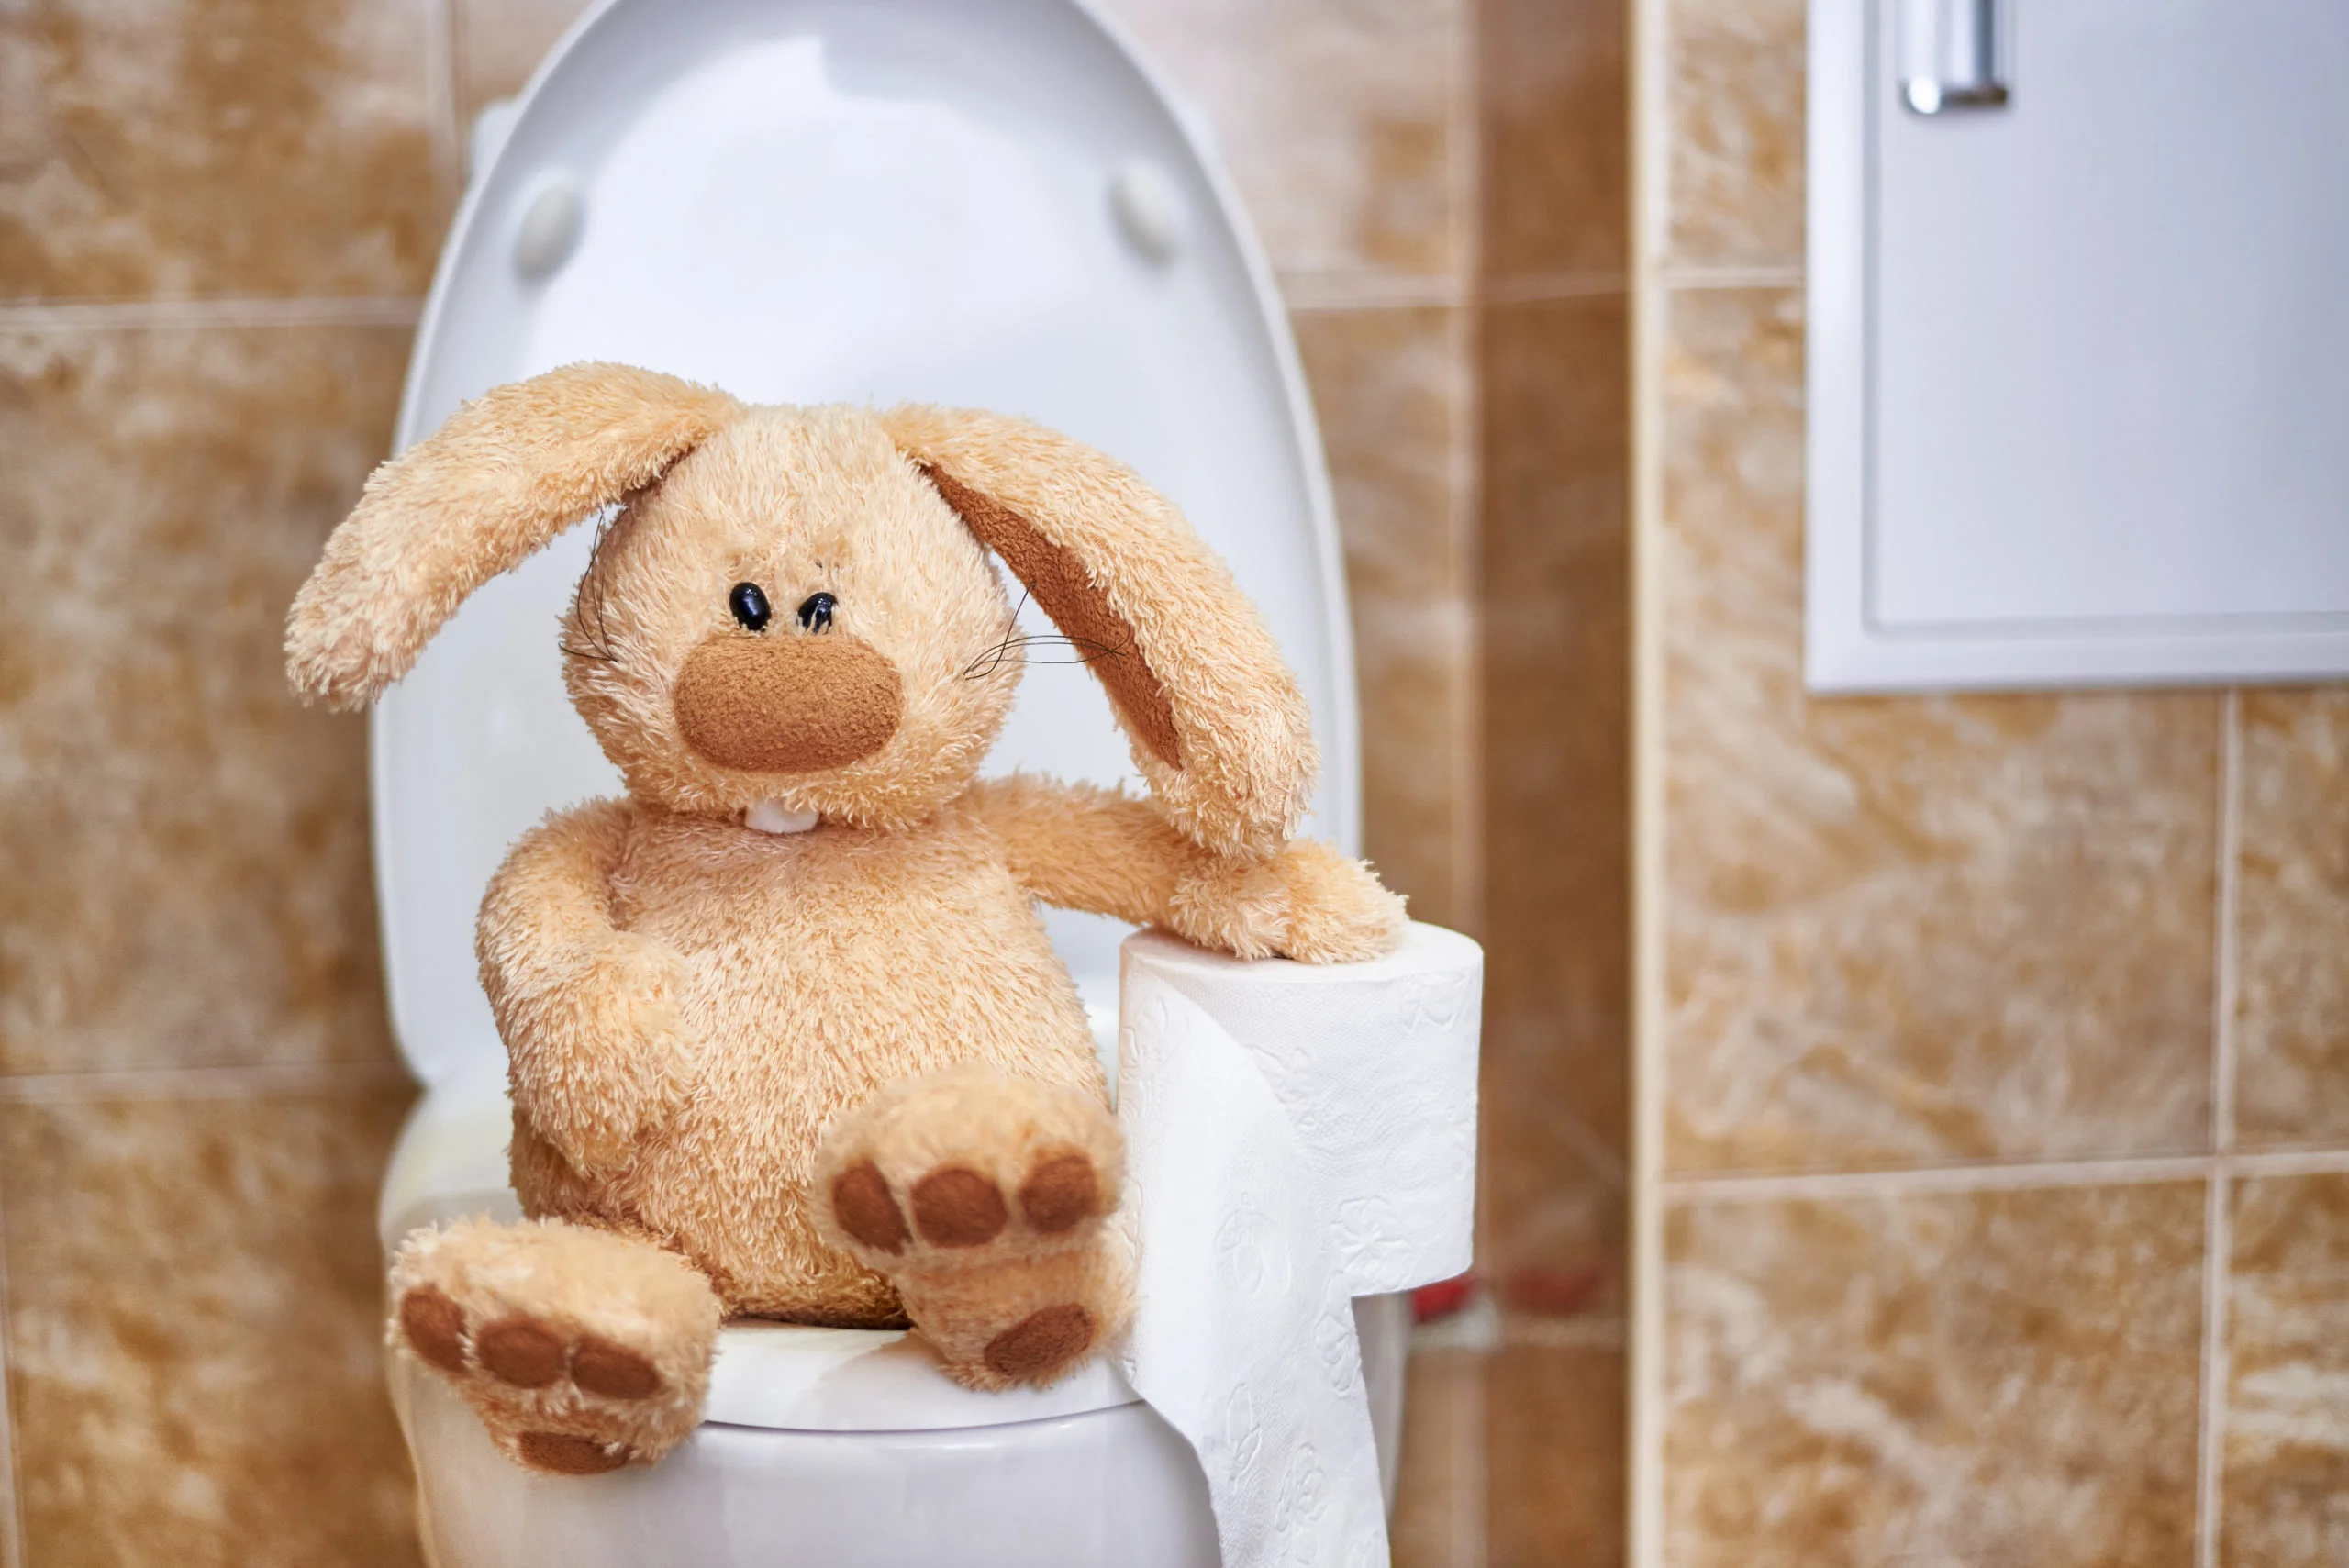 Toy rabbit in the toilet